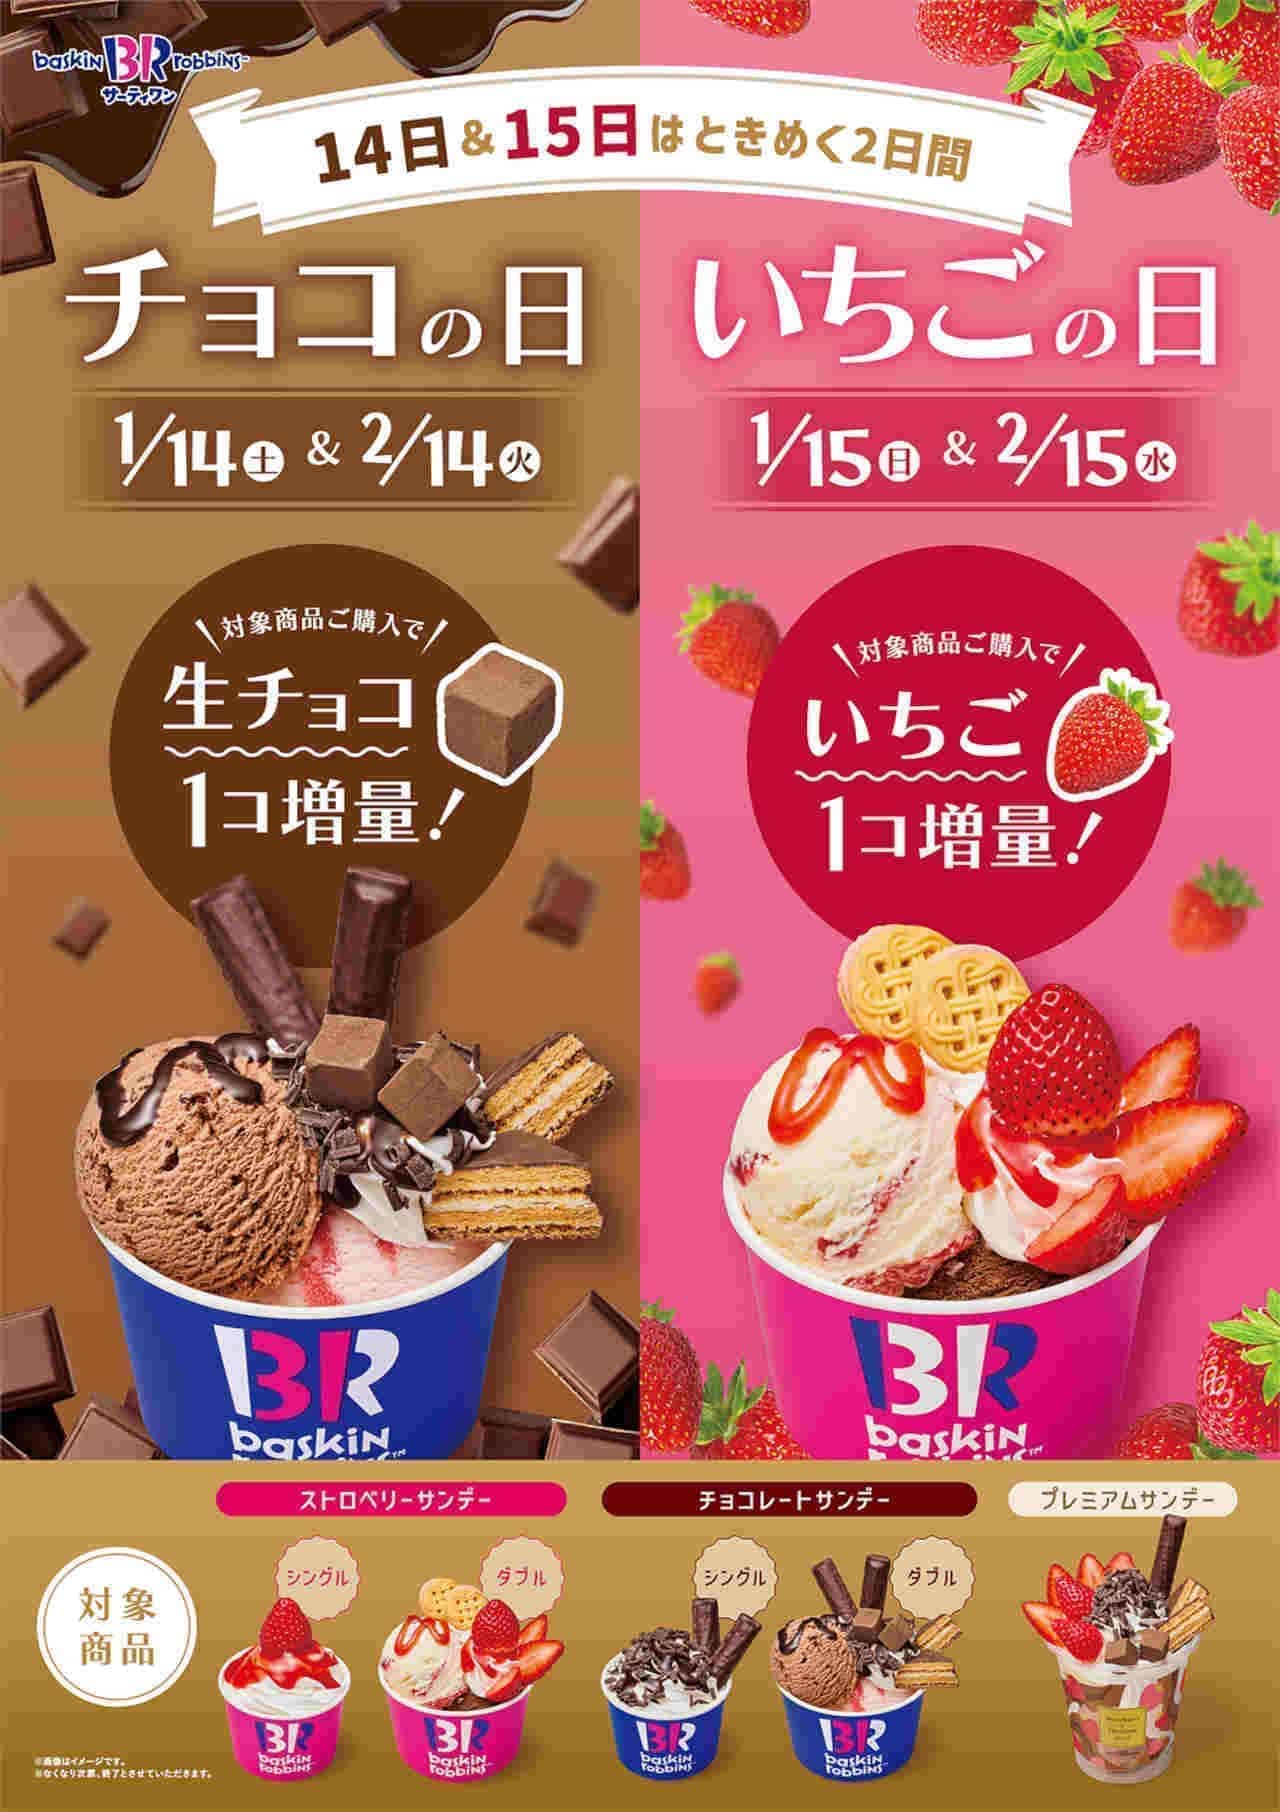 Thirty-One Ice Cream "Chocolate Day & Strawberry Day